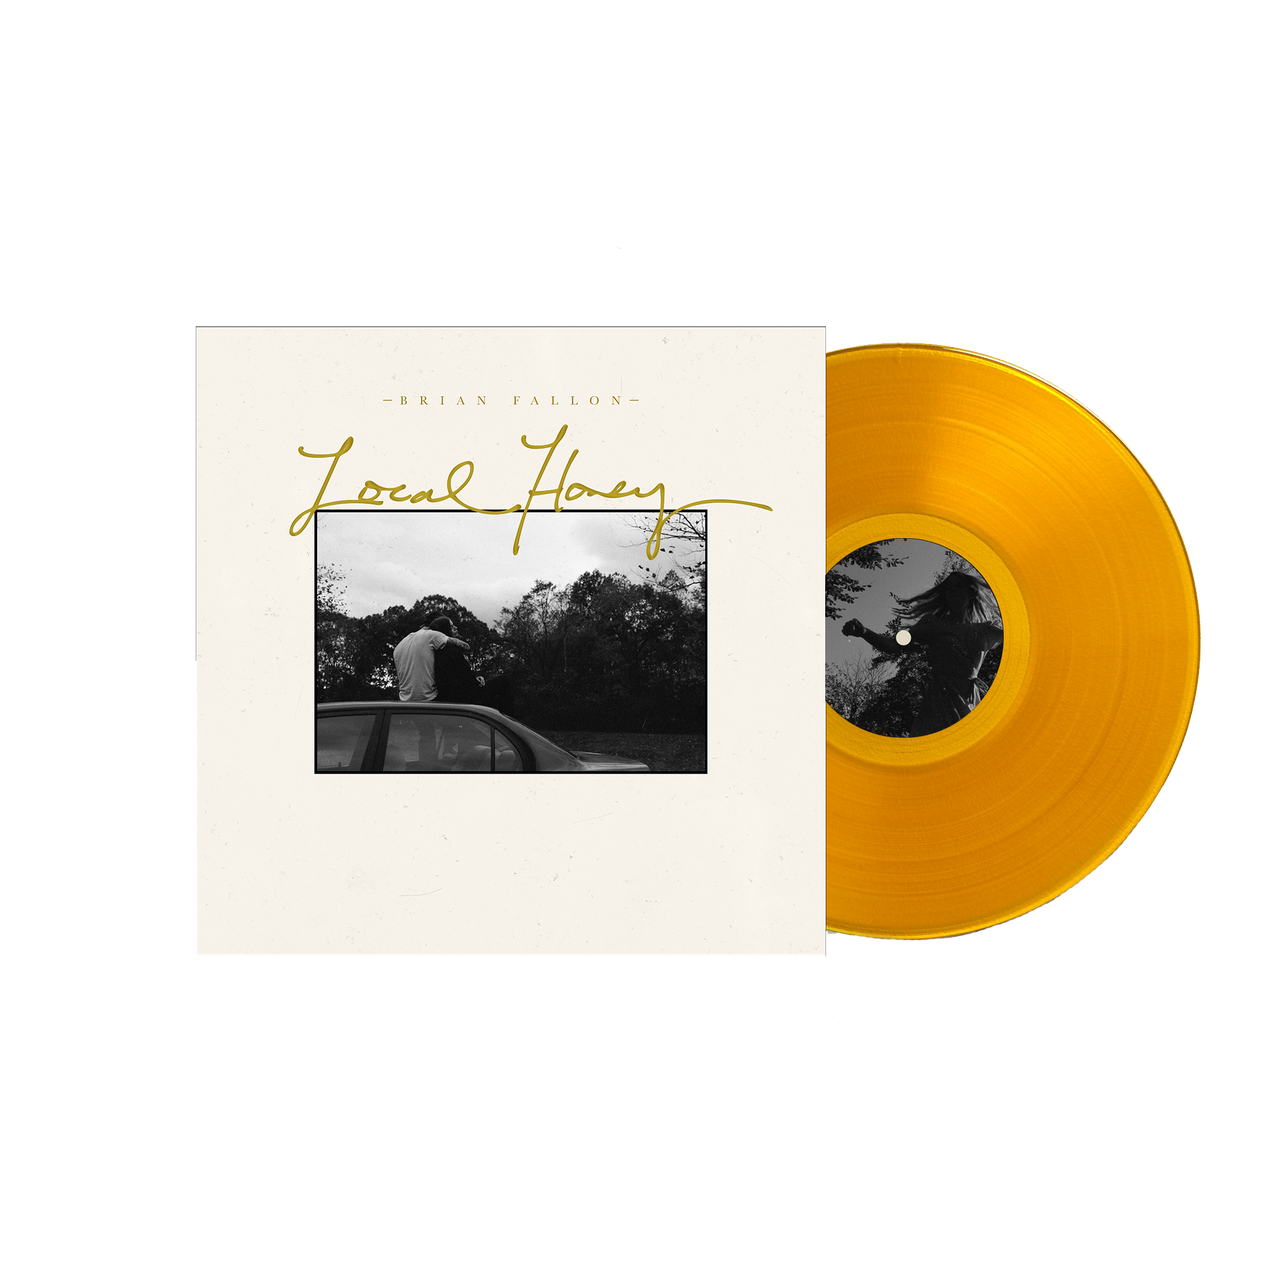 Brian Fallon: Local Honey Vinyl LP